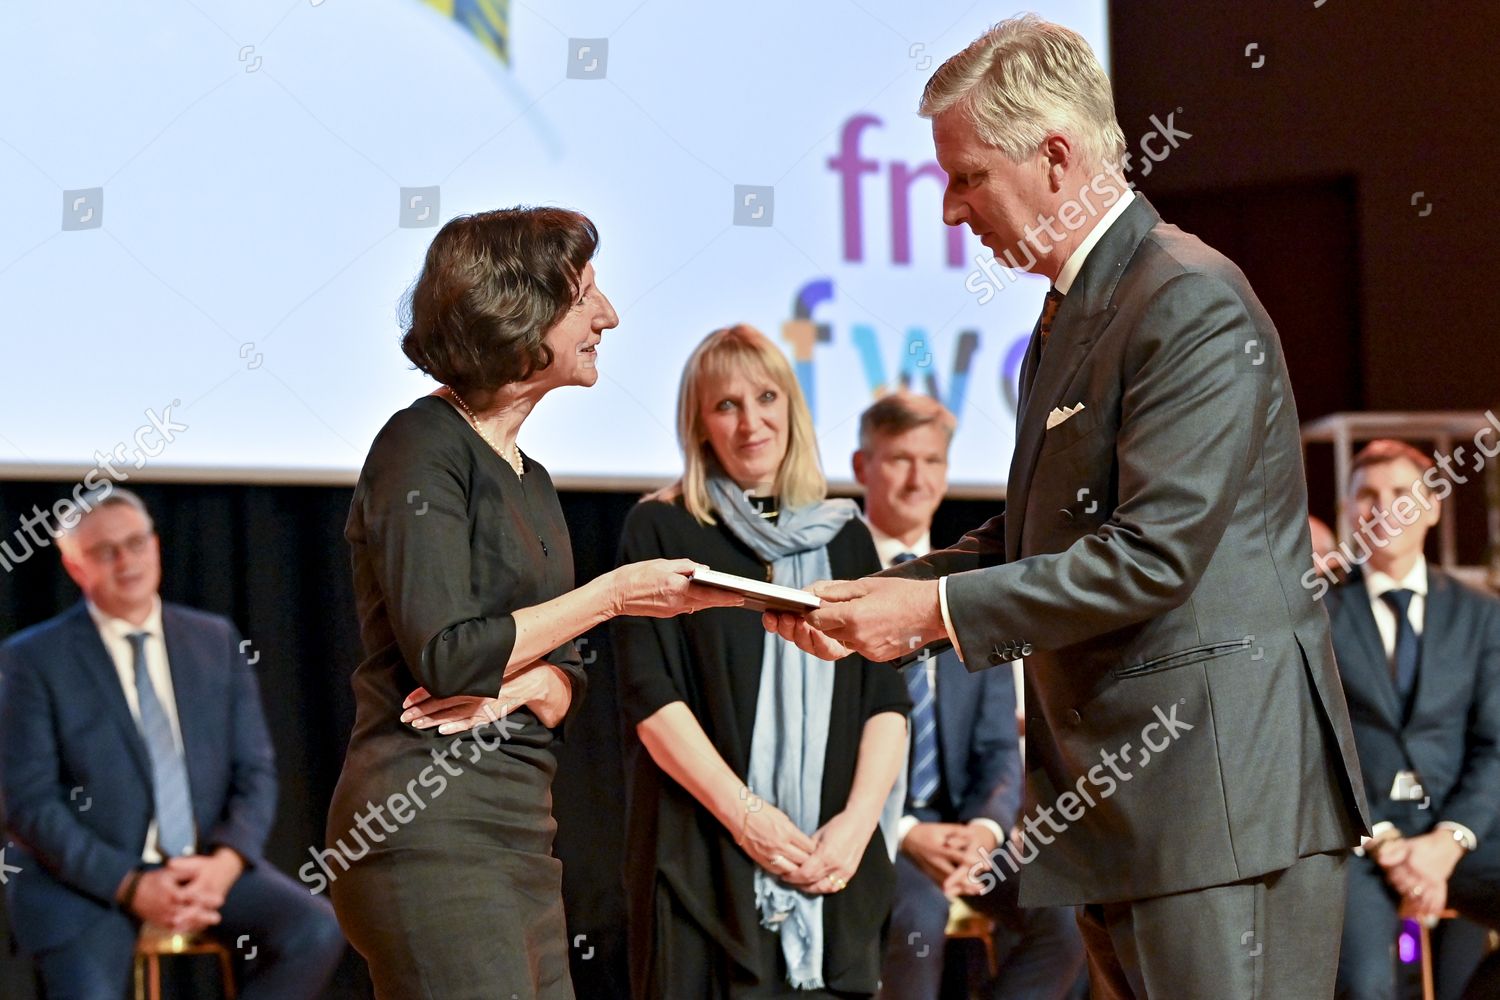 science-royals-scientific-excellence-awards-brussels-belgium-shutterstock-editorial-12523234d.jpg